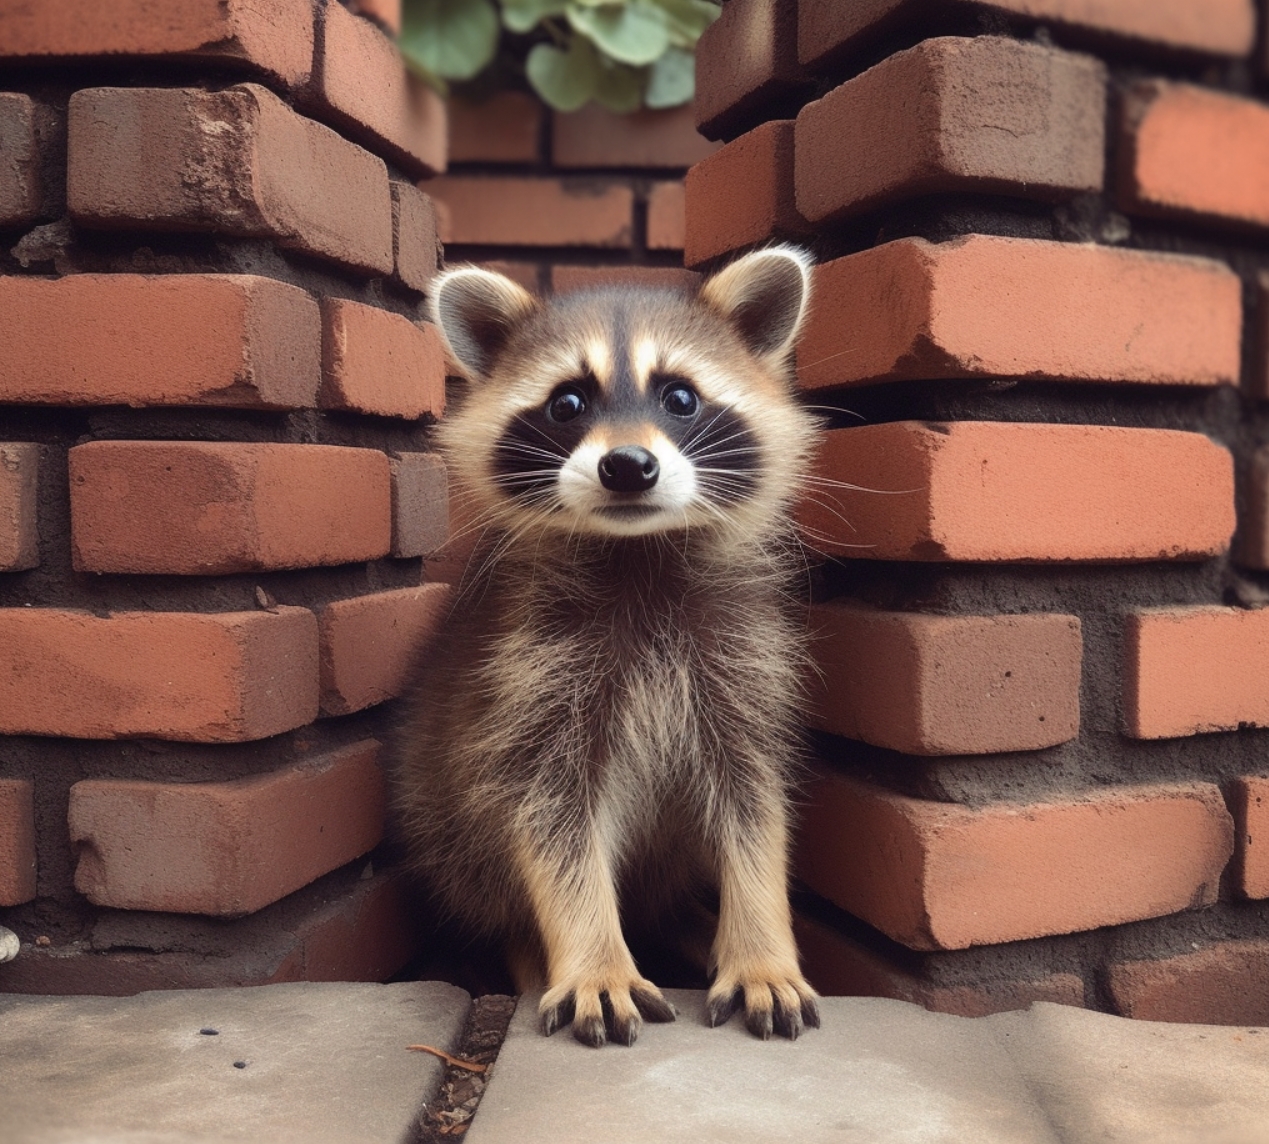 Are Baby Raccoons Dangerous?